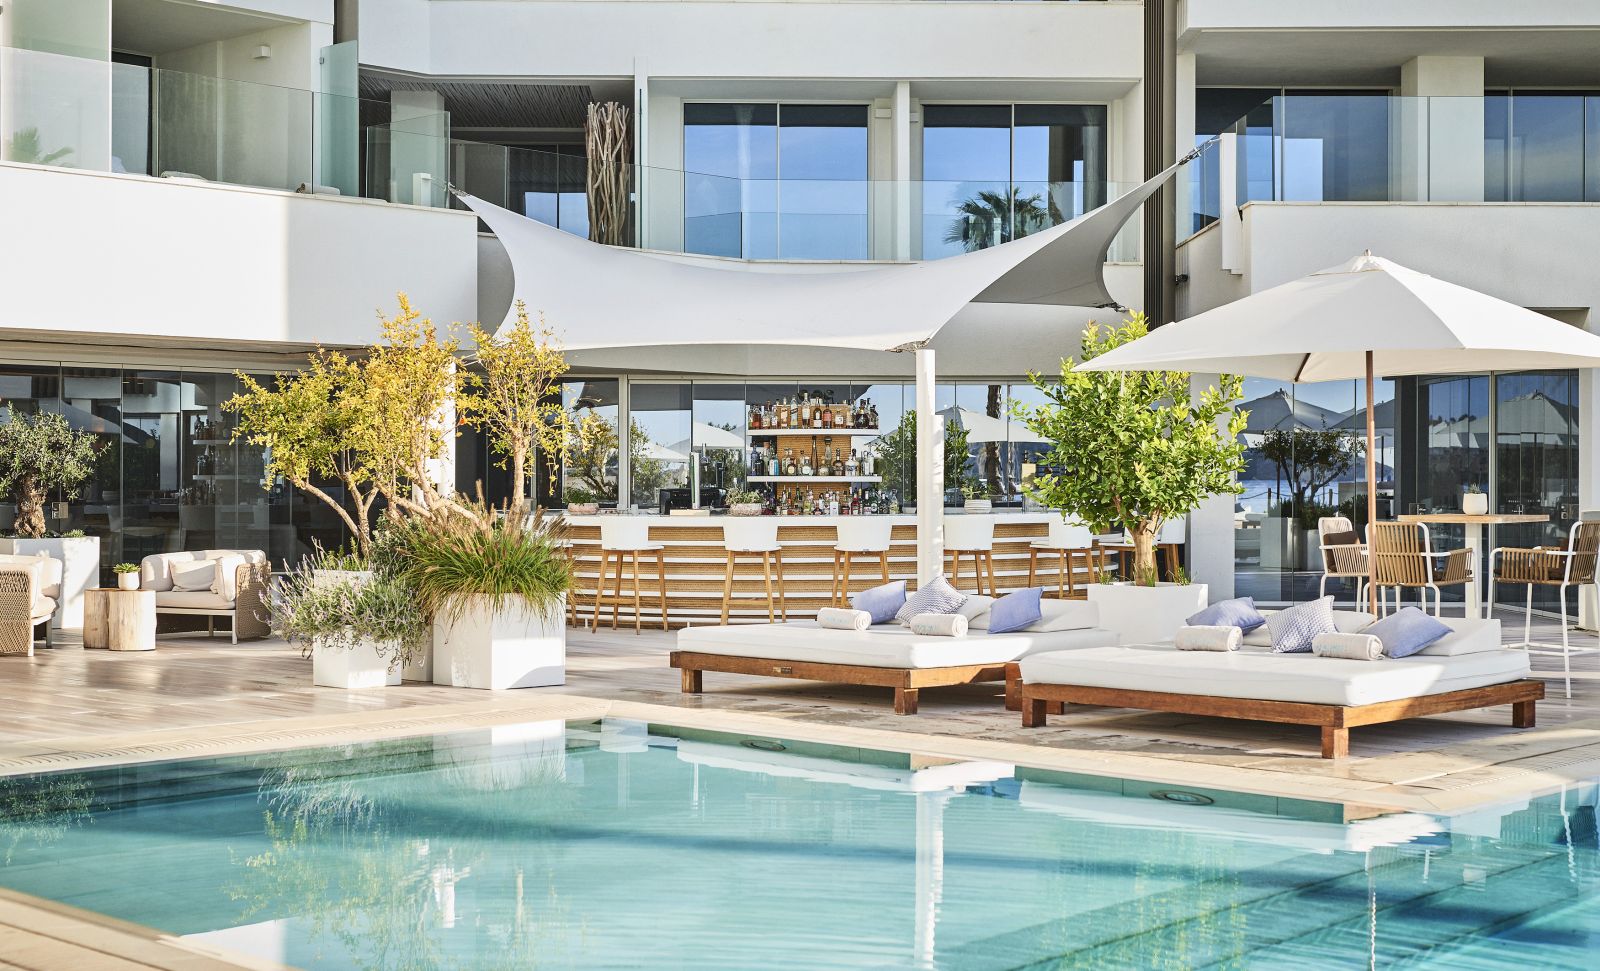 Pool Bar and sun loungers at luxury hotel Nobu Ibiza